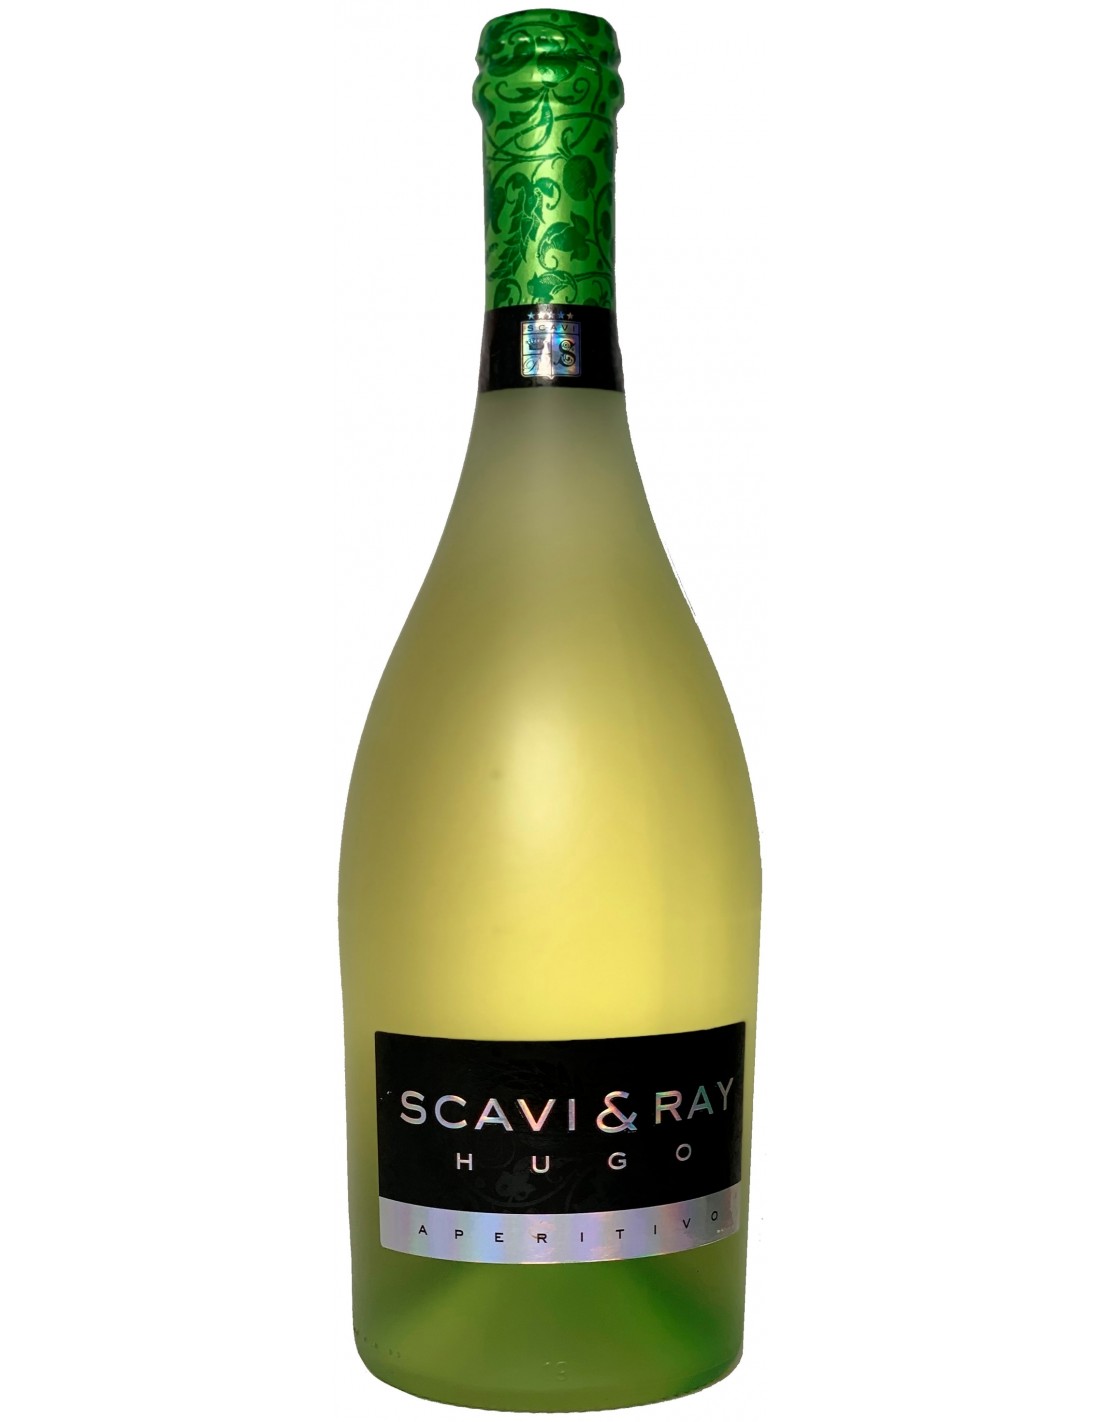 Aperitiv Scavi&Ray Hugo, 6% alc., 0.75L alcooldiscount.ro